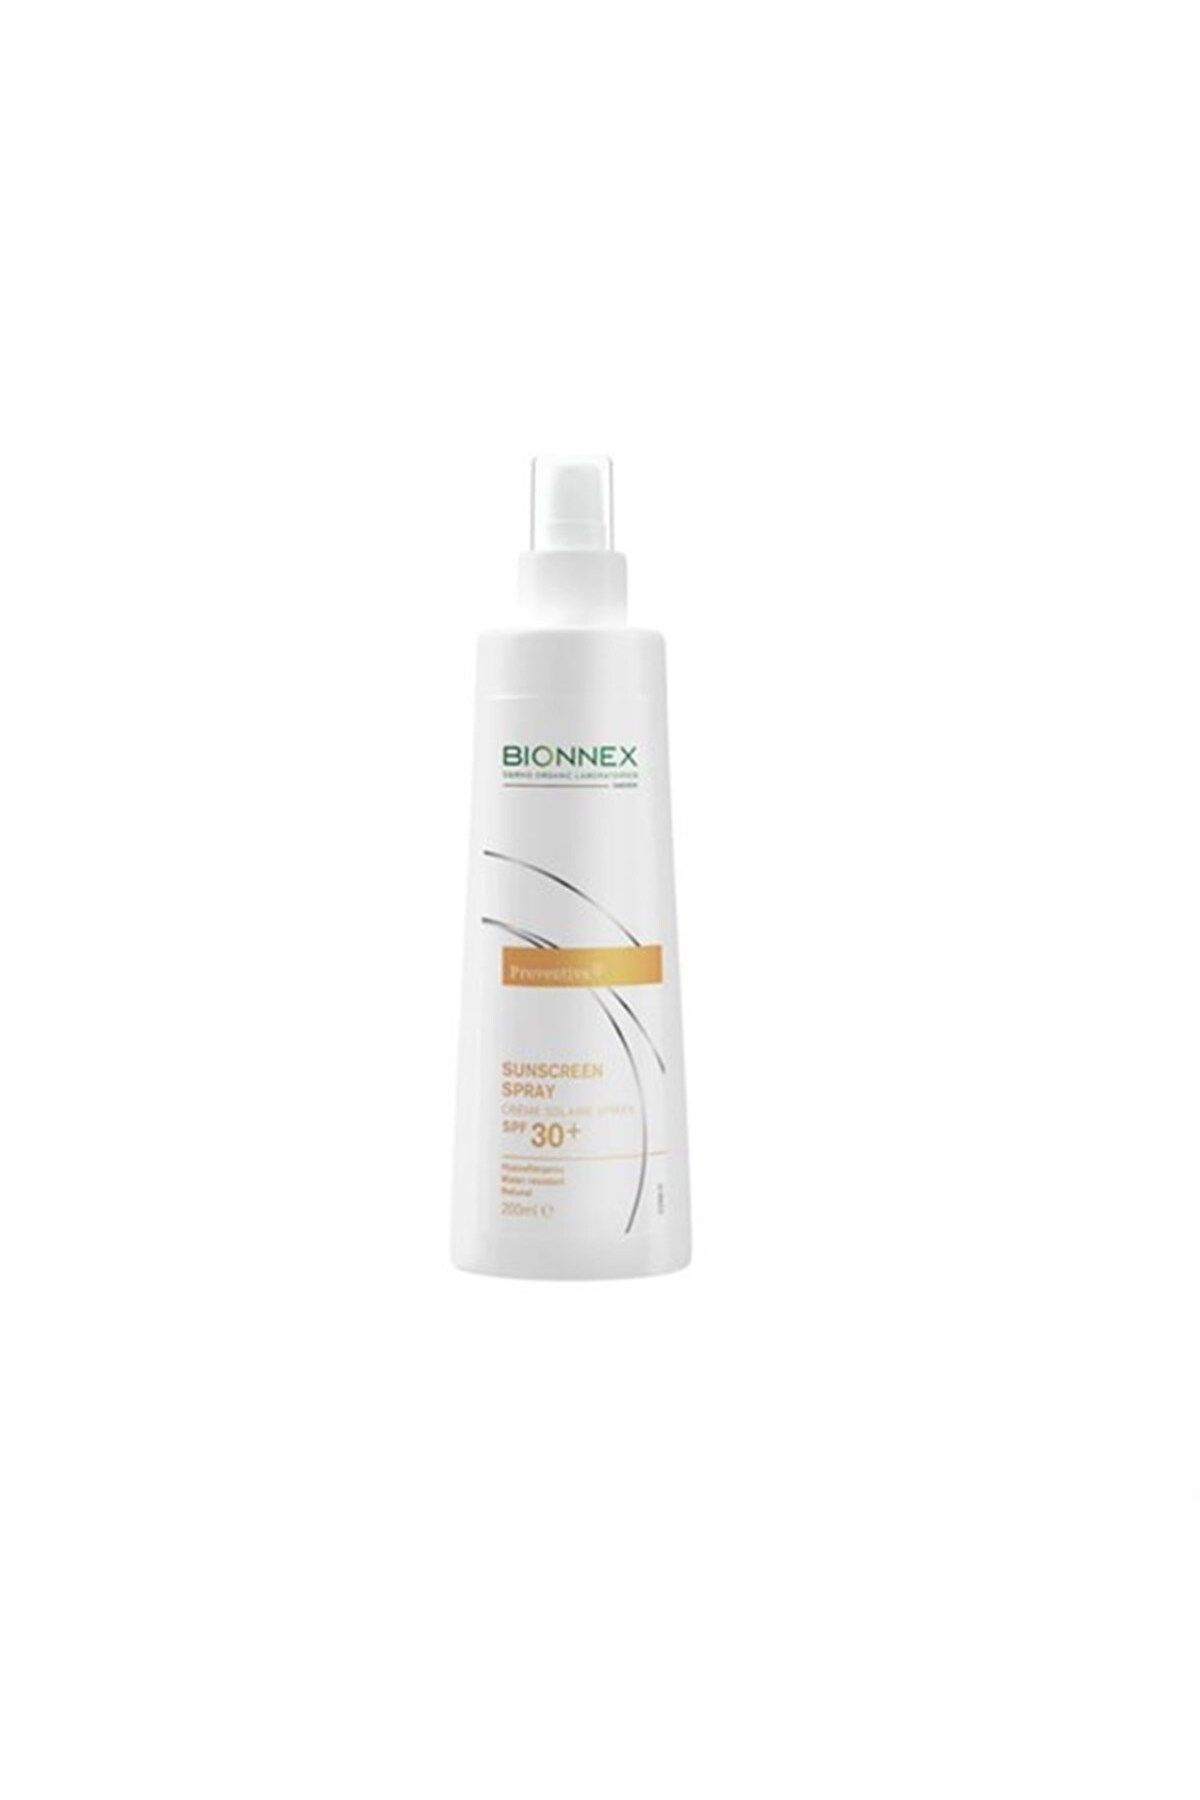 Bionnex Sunscreen Spray Spf 30 200 ml